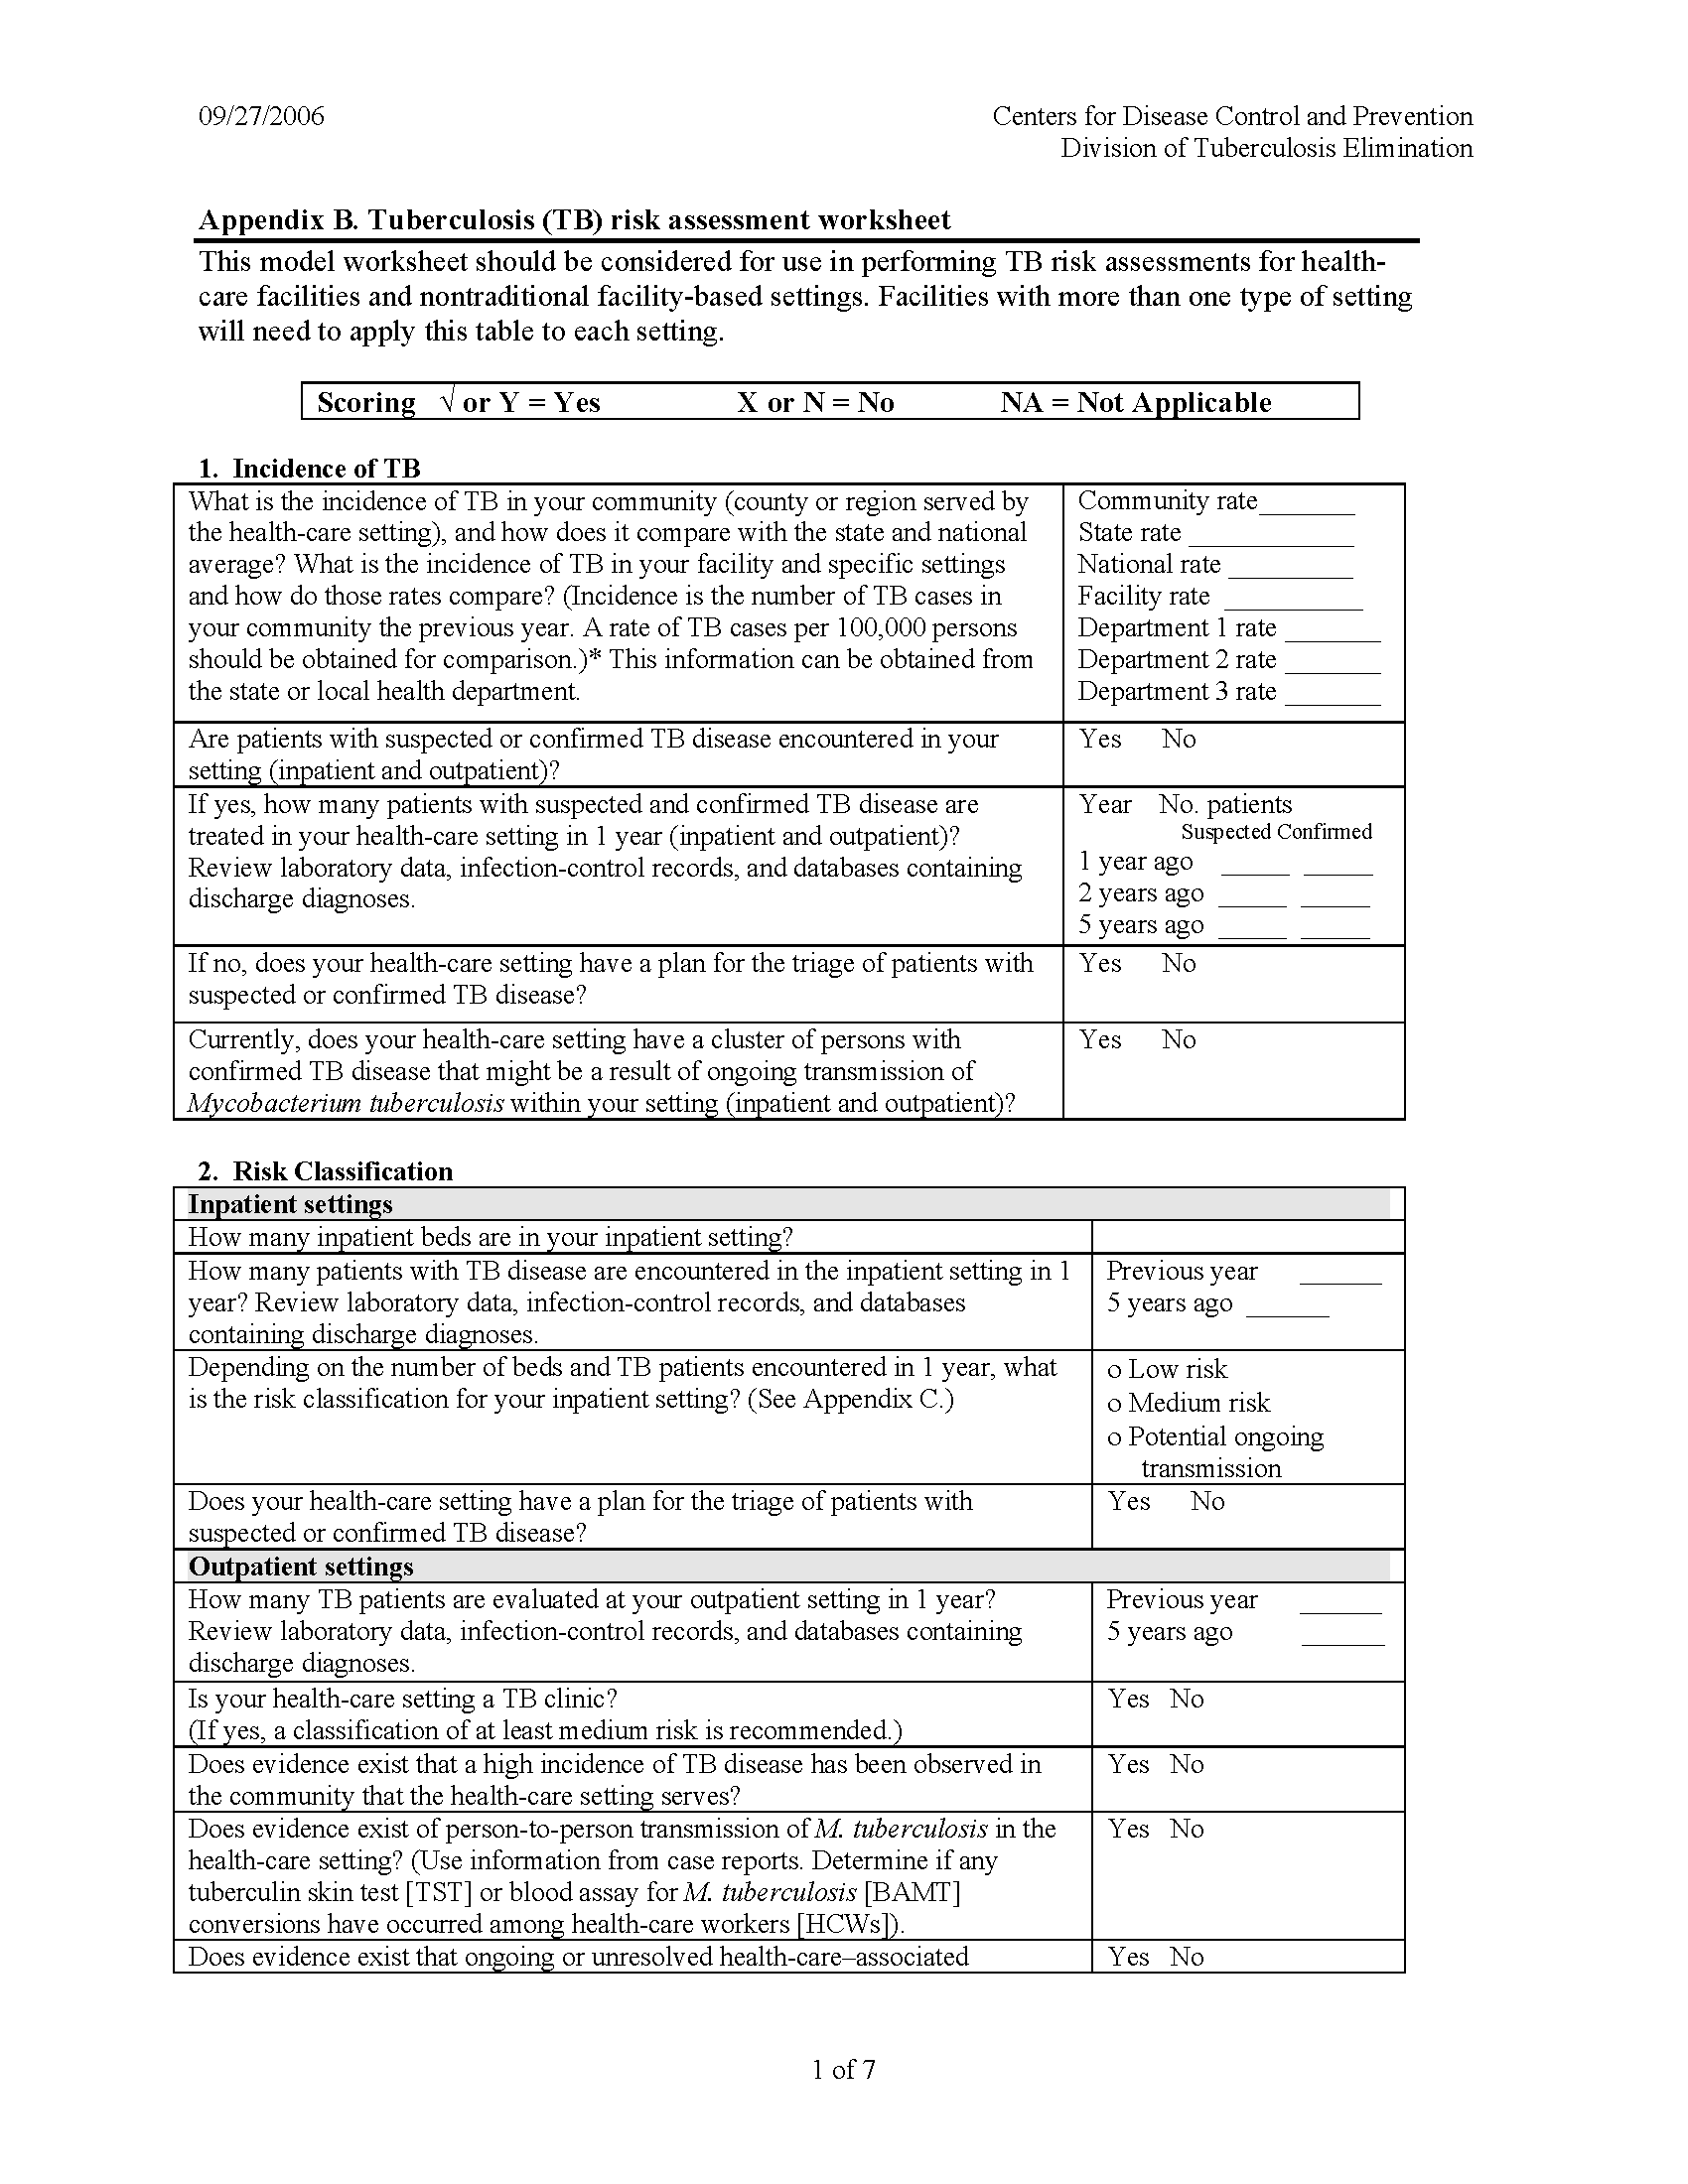 Tuberculosis Facility Risk Assessment Worksheet